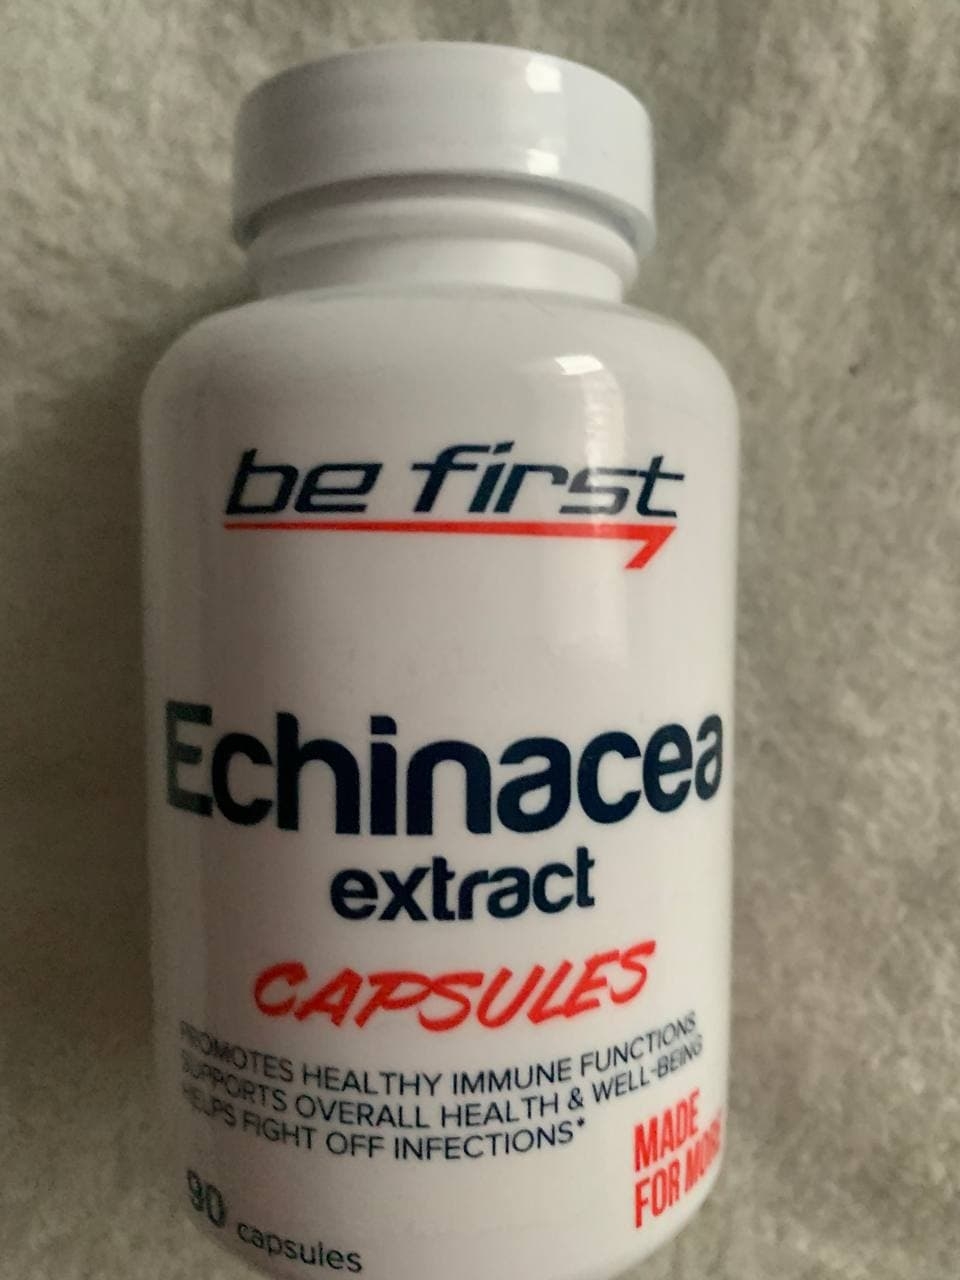 Be First Echinacea extract capsules, 90 капсул - Для иммунитета хорошая штука